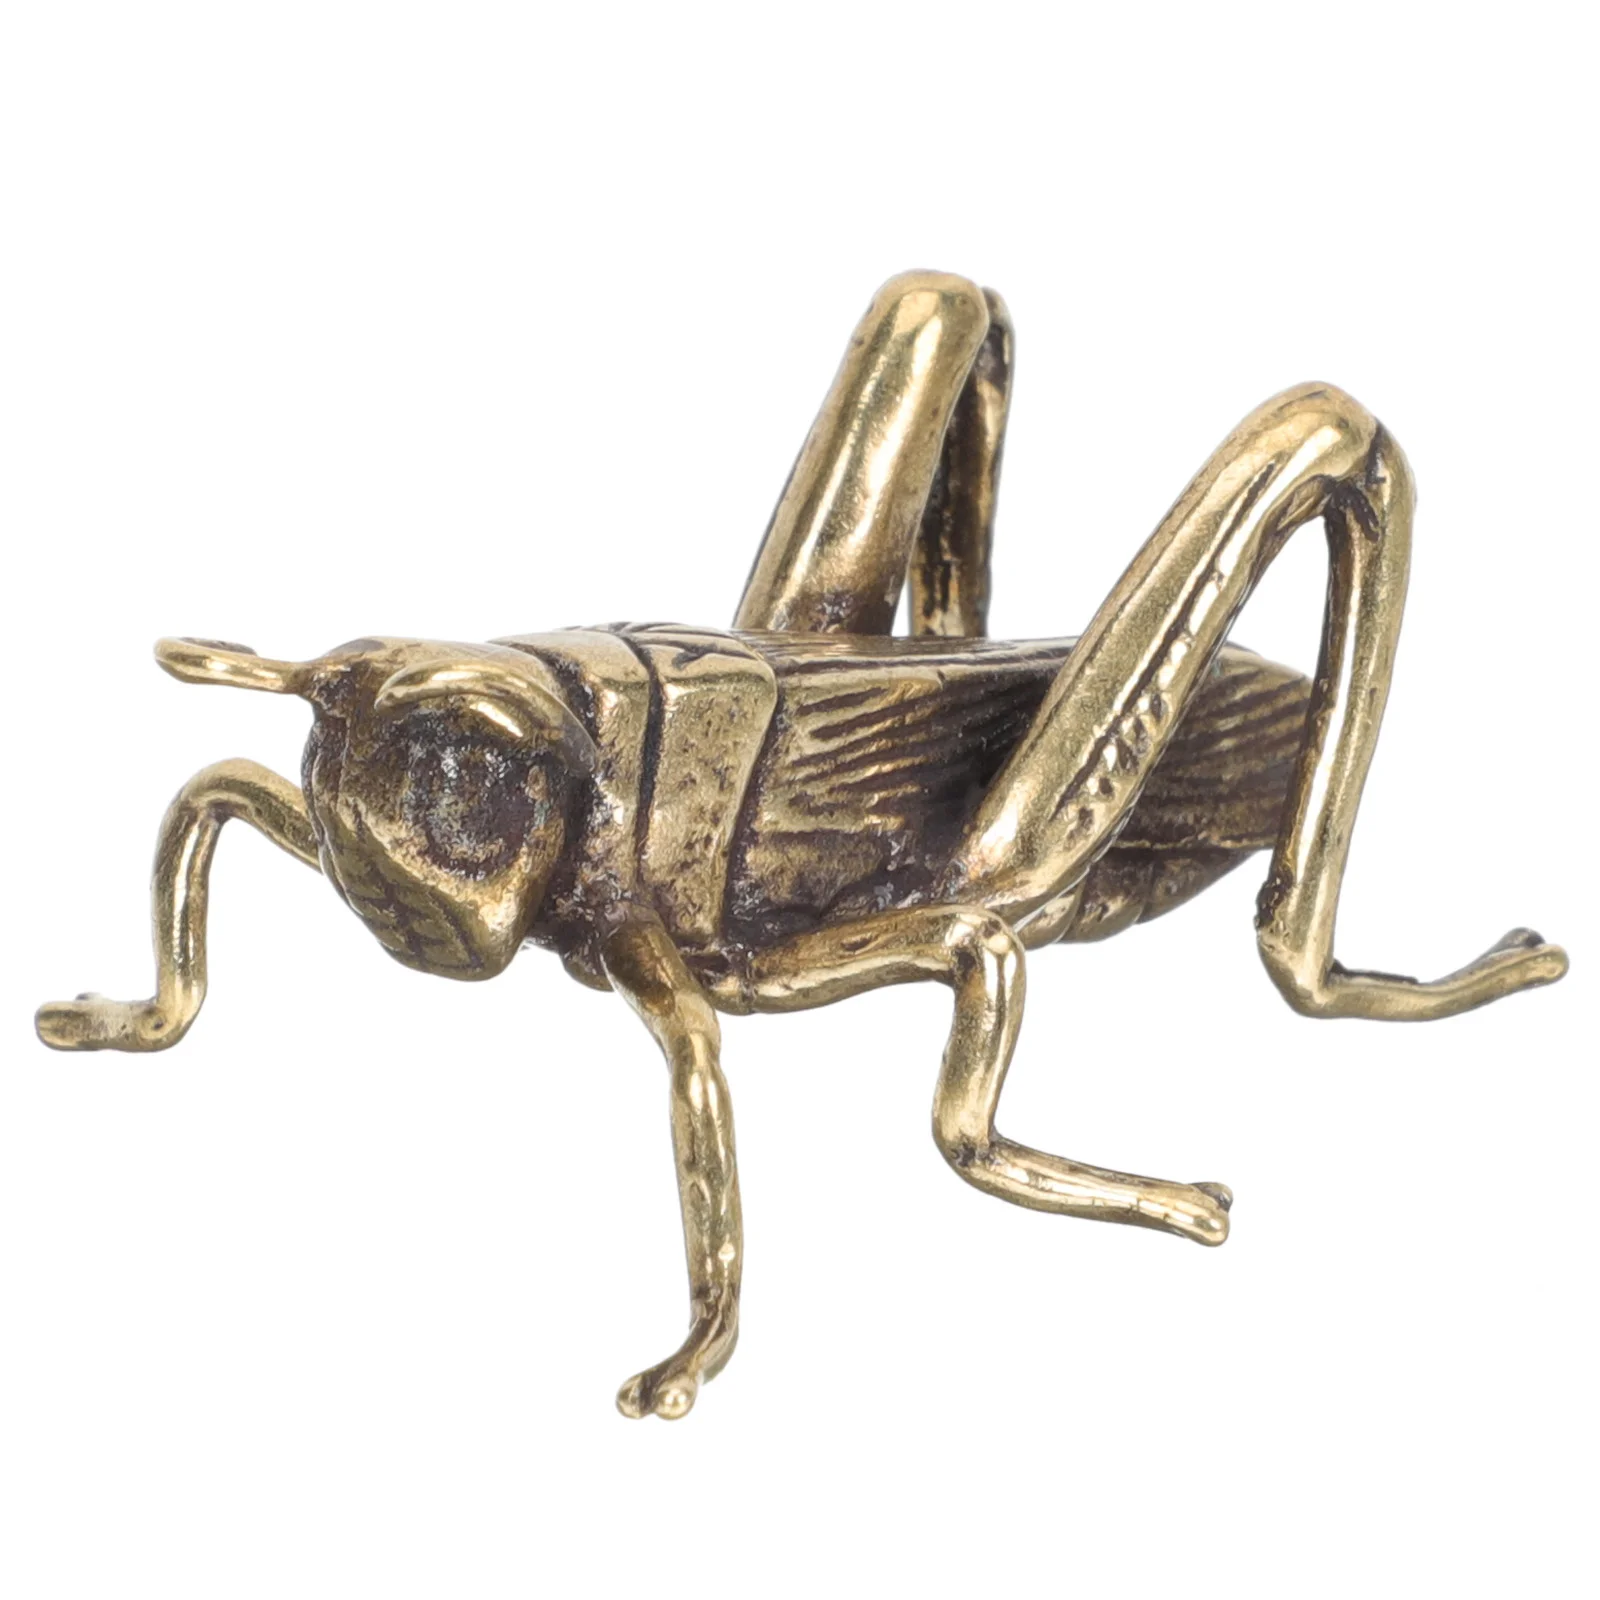 

Cricket Ornaments Brass Craft Figurine Insect Office Desk Decor Christmas Vintage Decorations Statue Grasshopper Garden